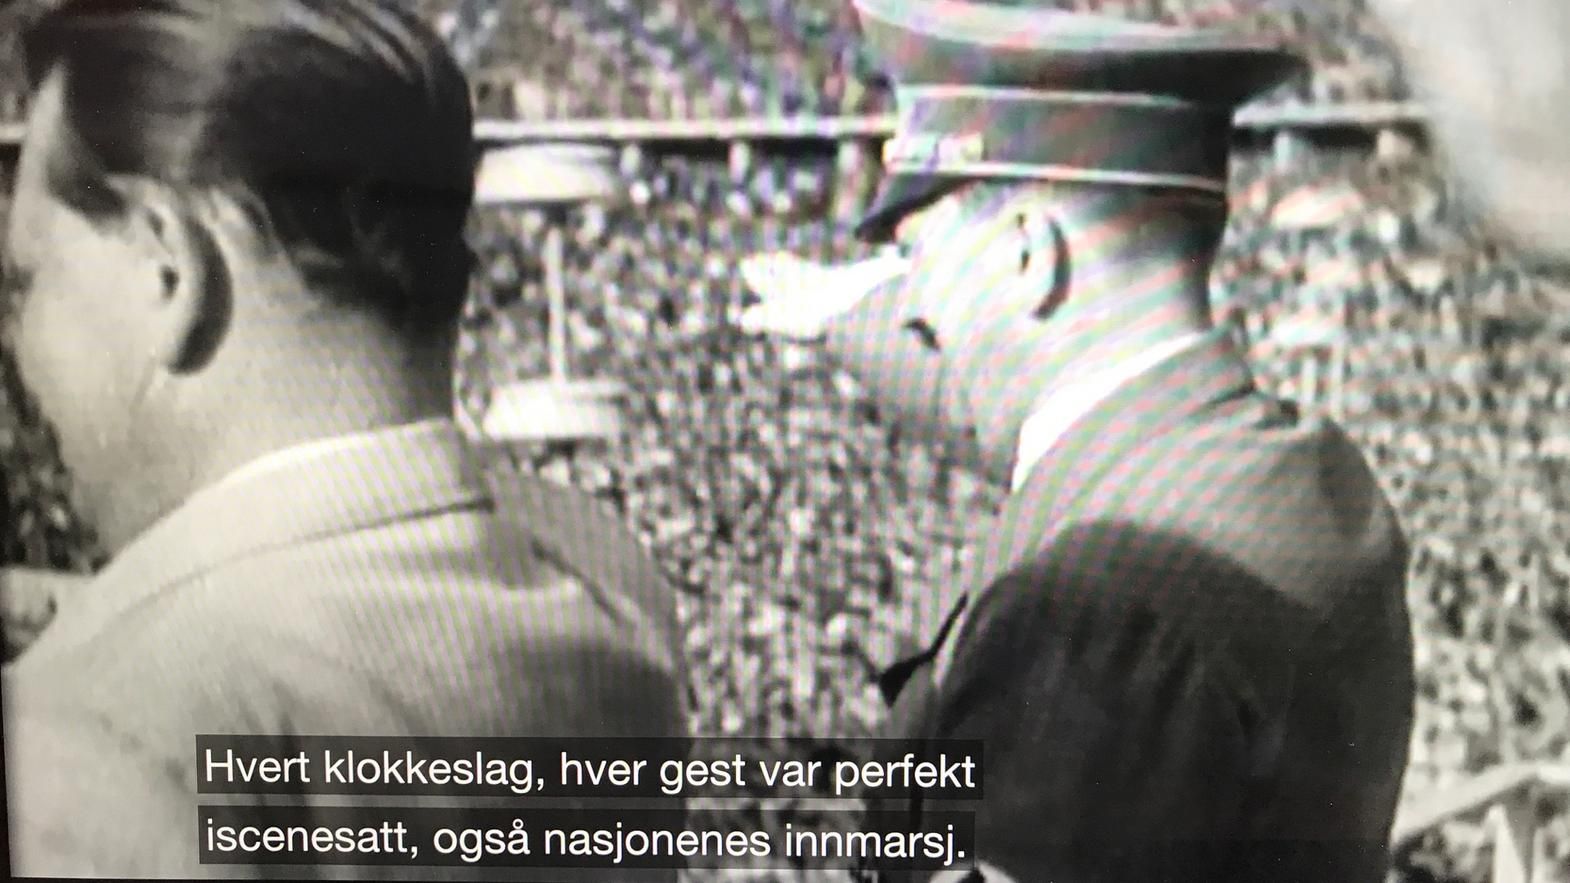 Hitler hilser under Olympiaden i Tyskland 1936